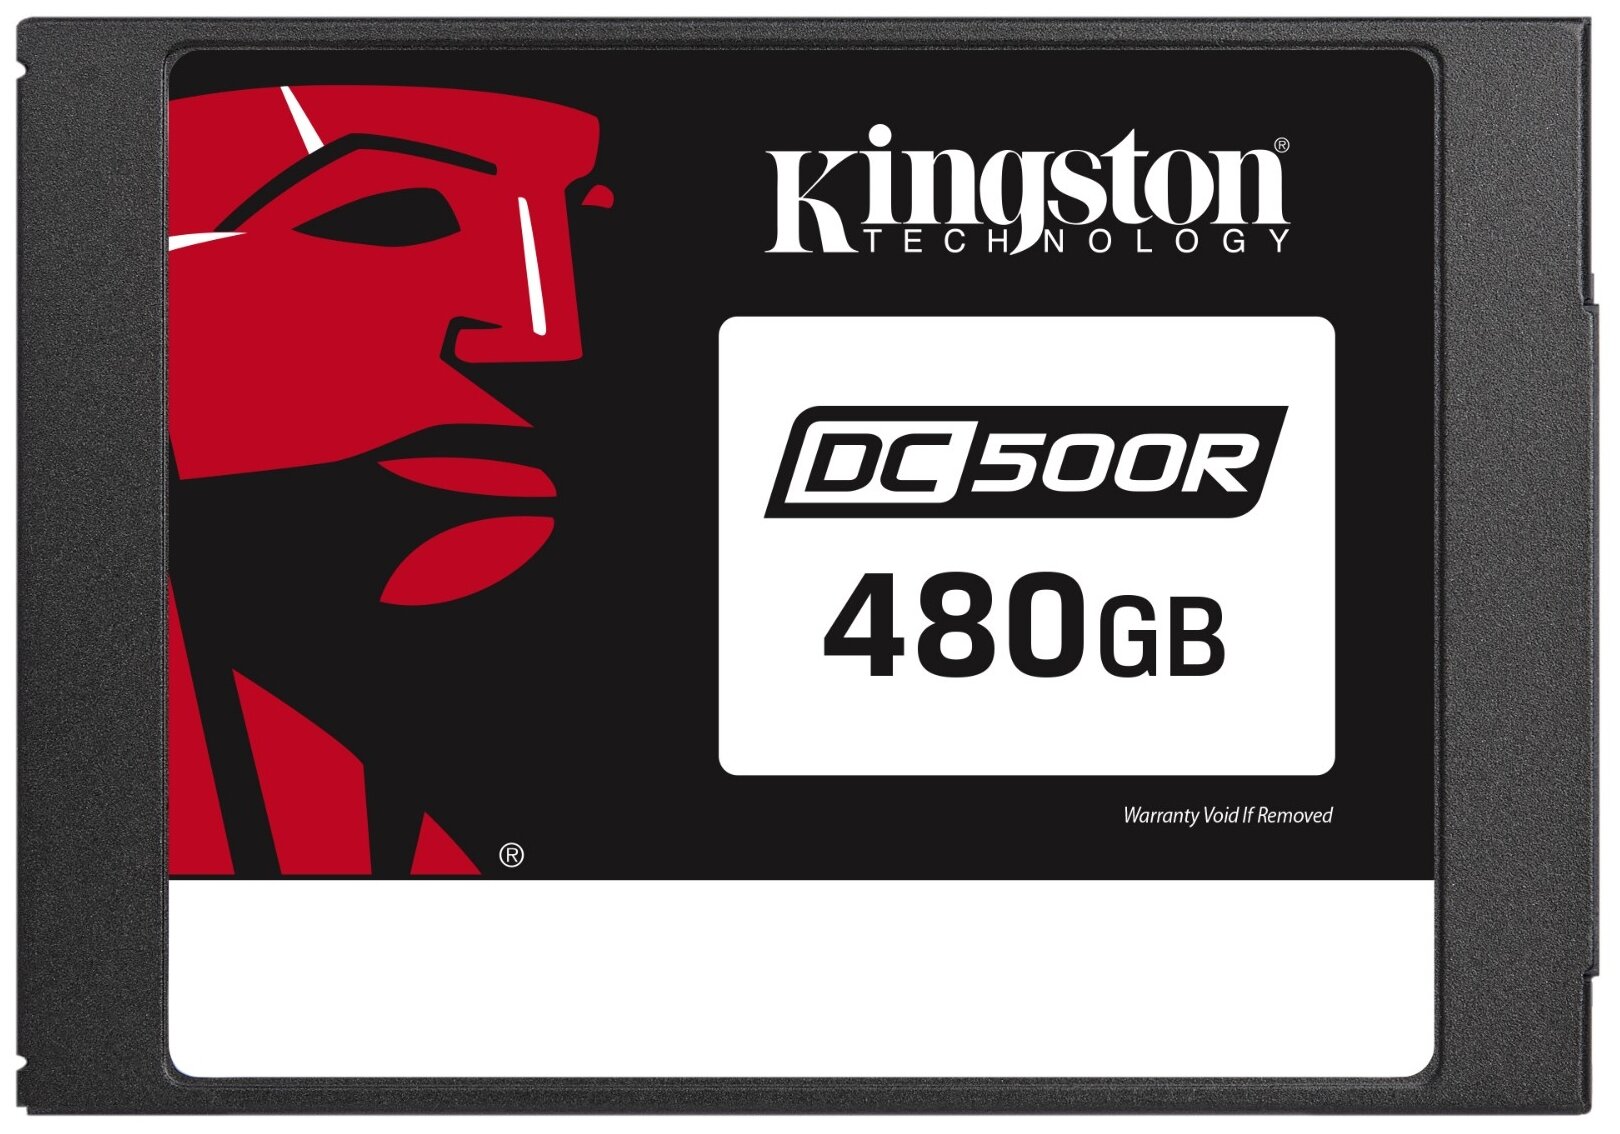 Твердотельный накопитель KID-SEDC500R/480G Kingston 480GB SSDNow DC500R (Read-Centric) SATA 3 2.5 (7mm height) 3D TLC